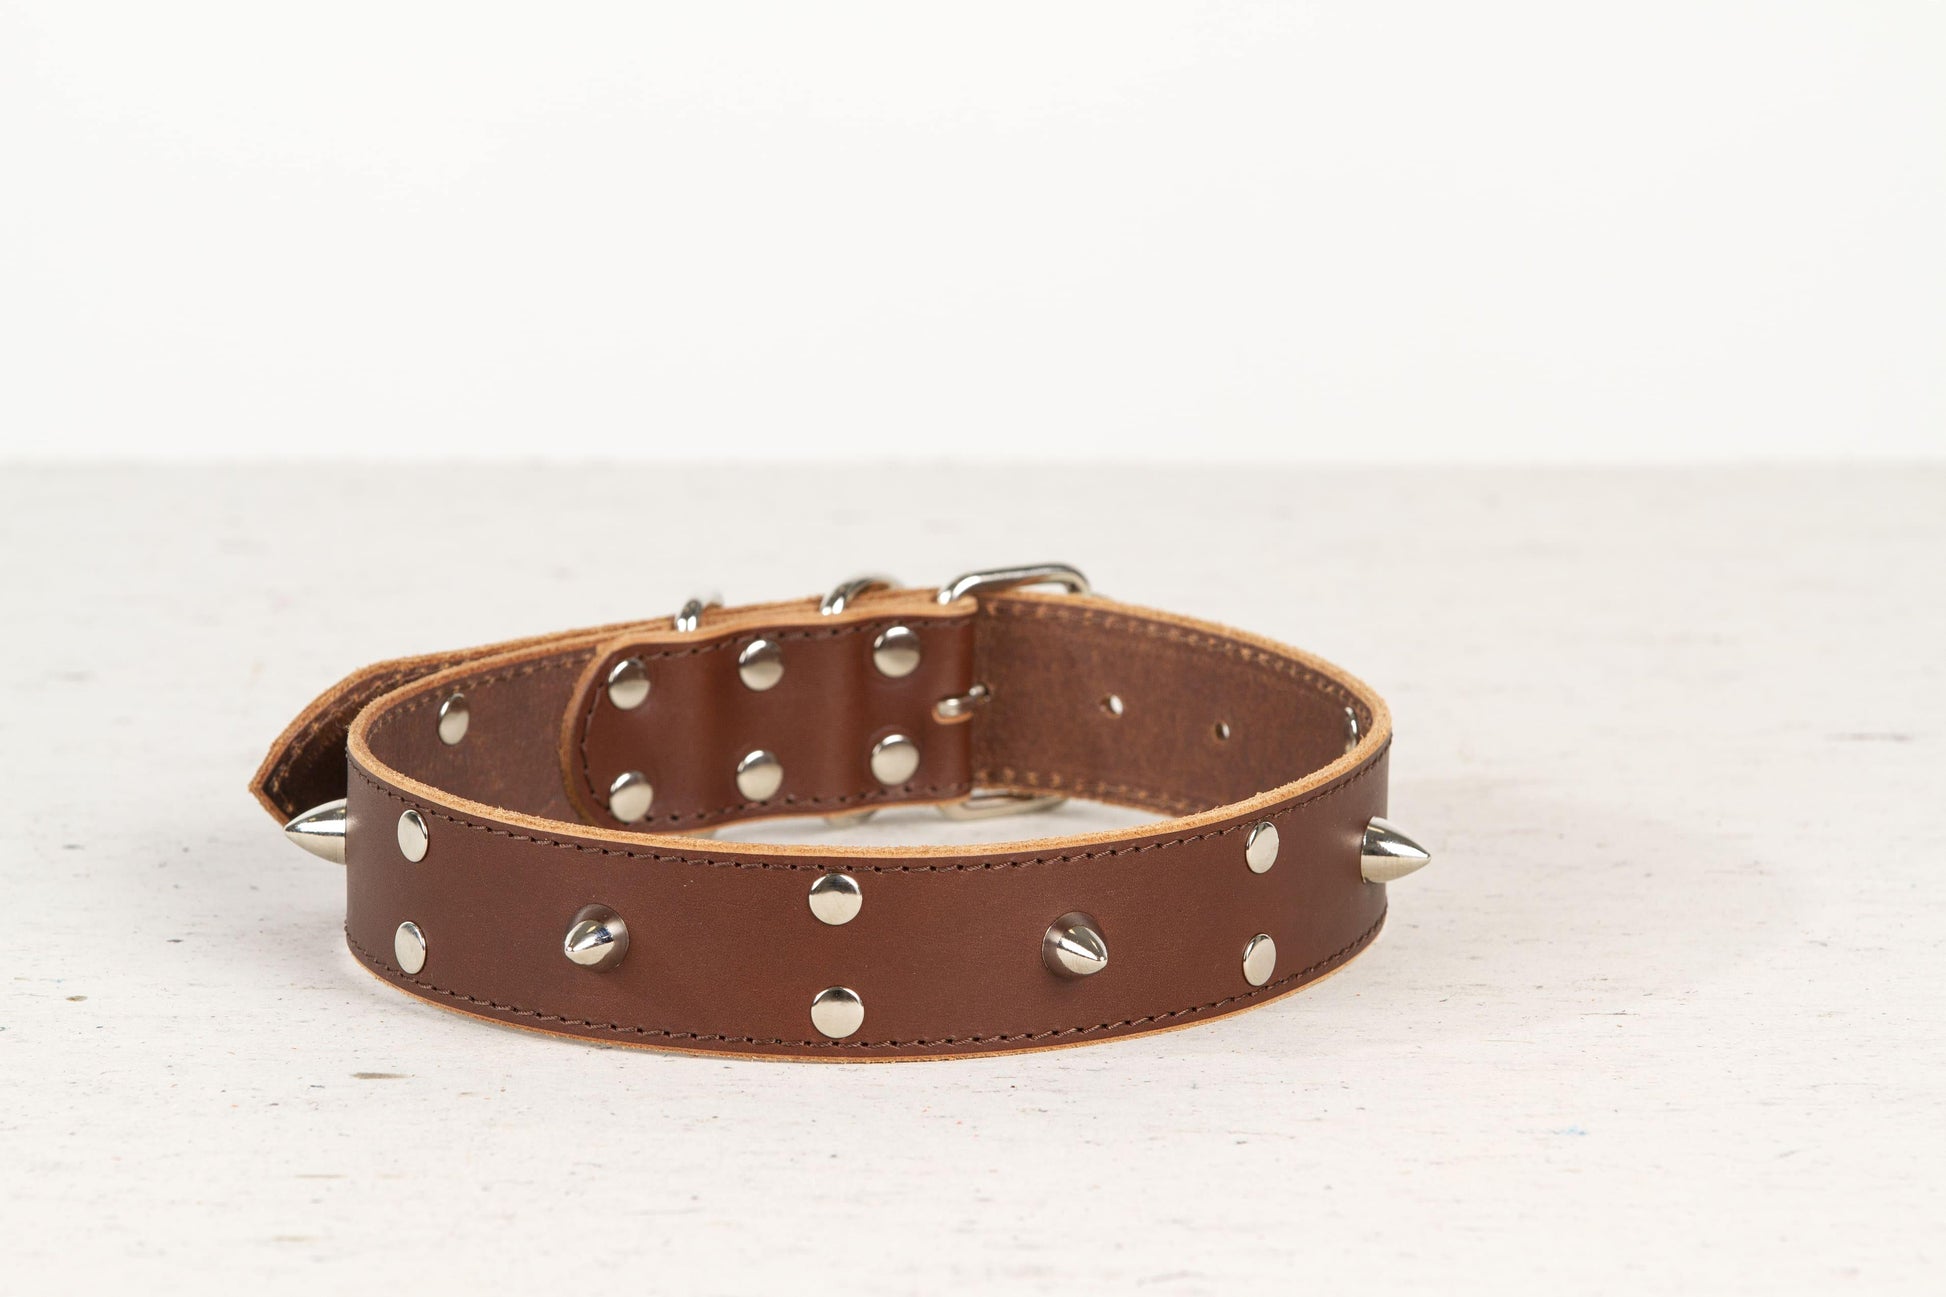 Handmade brown leather STUDDED dog collar - premium dog goods handmade in Europe by animalistus